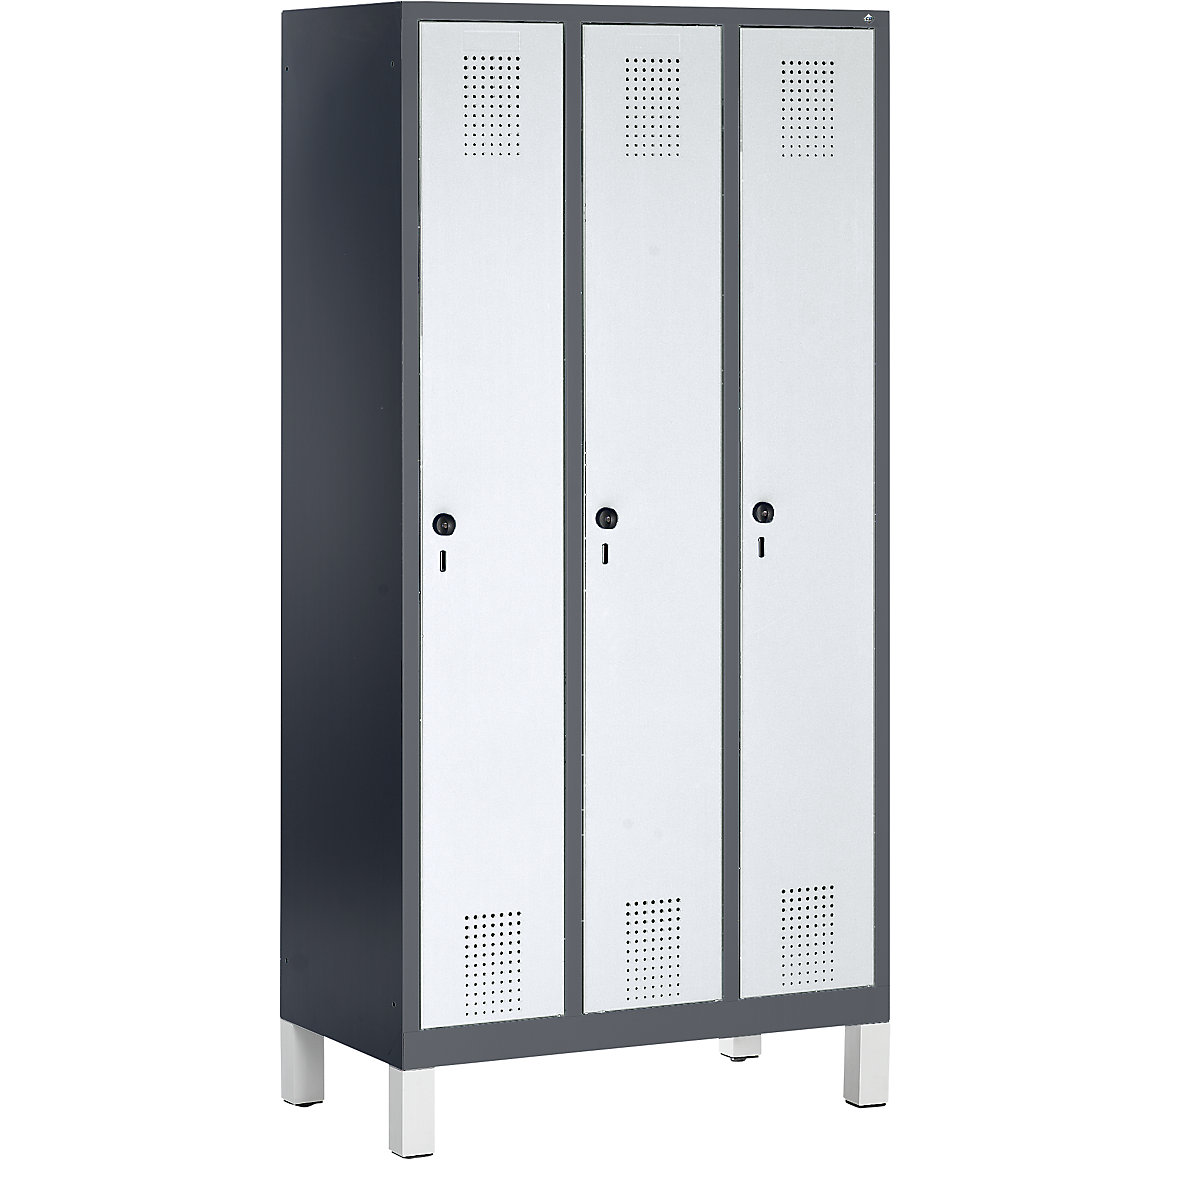 EVOLO cloakroom locker – C+P, with plastic feet, 3 compartments, compartment width 300 mm, black grey / white aluminium